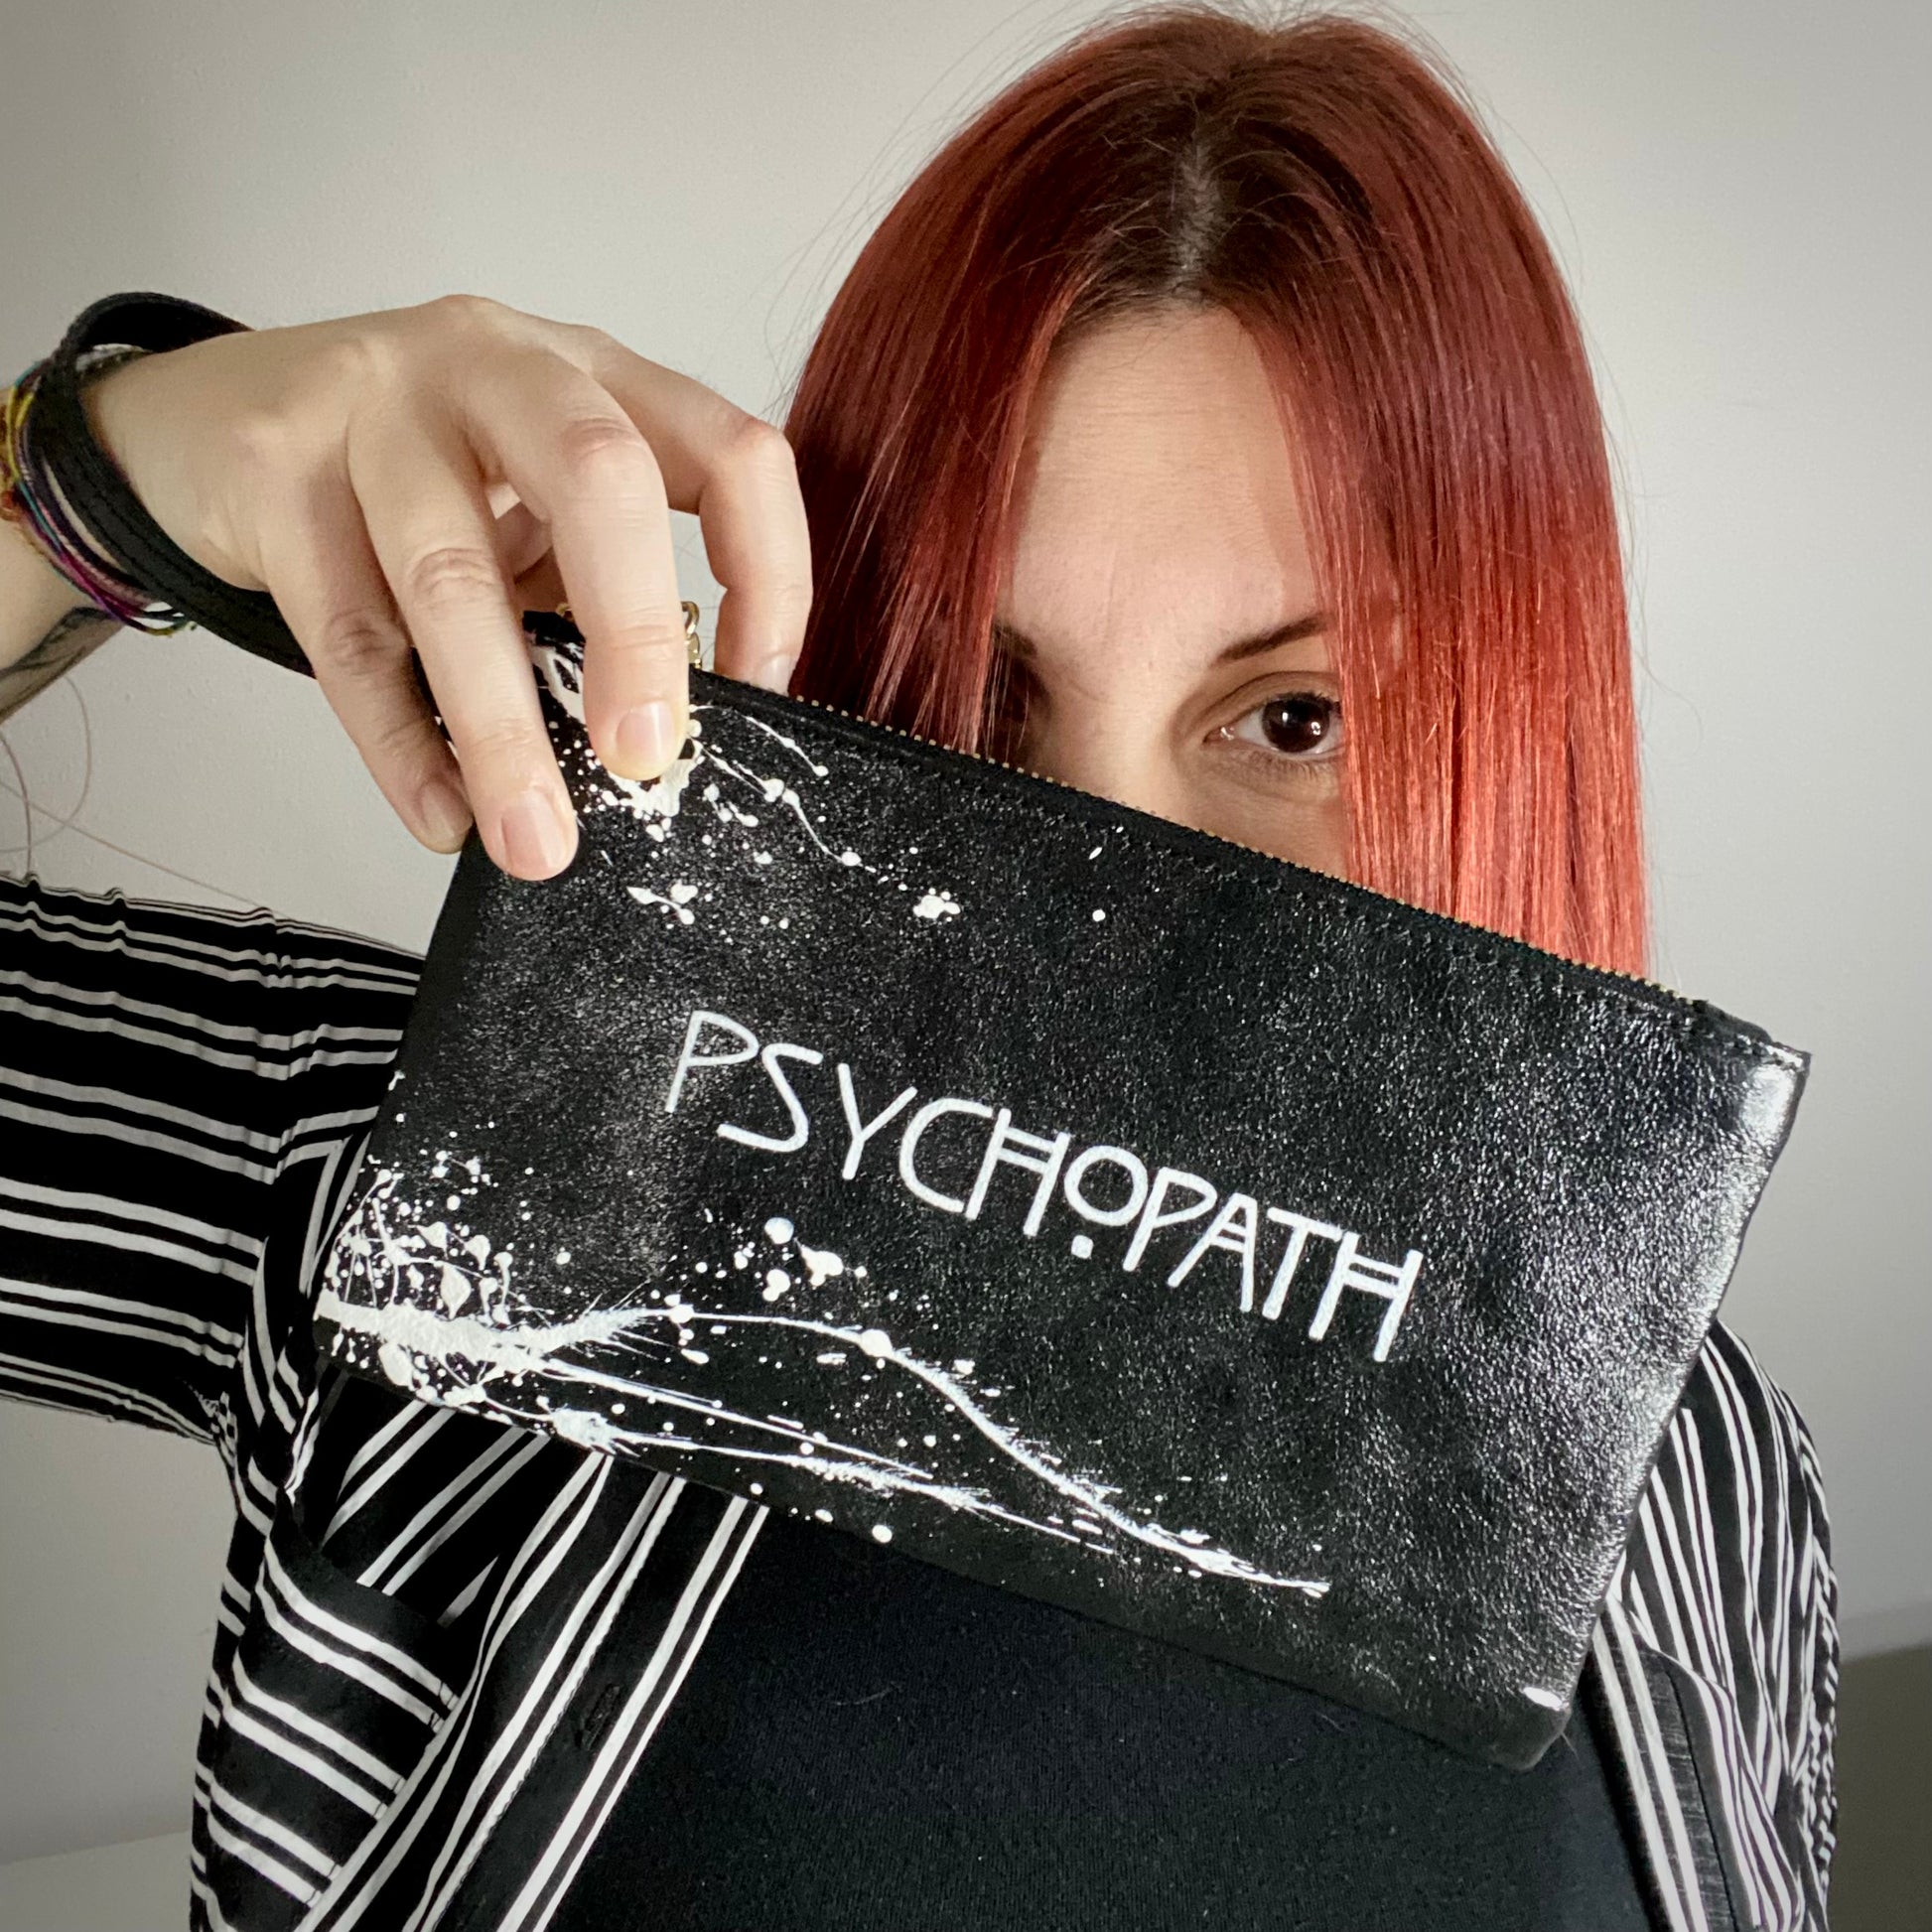 Mini-Me PSYCHOPATH - byMeArtStyle